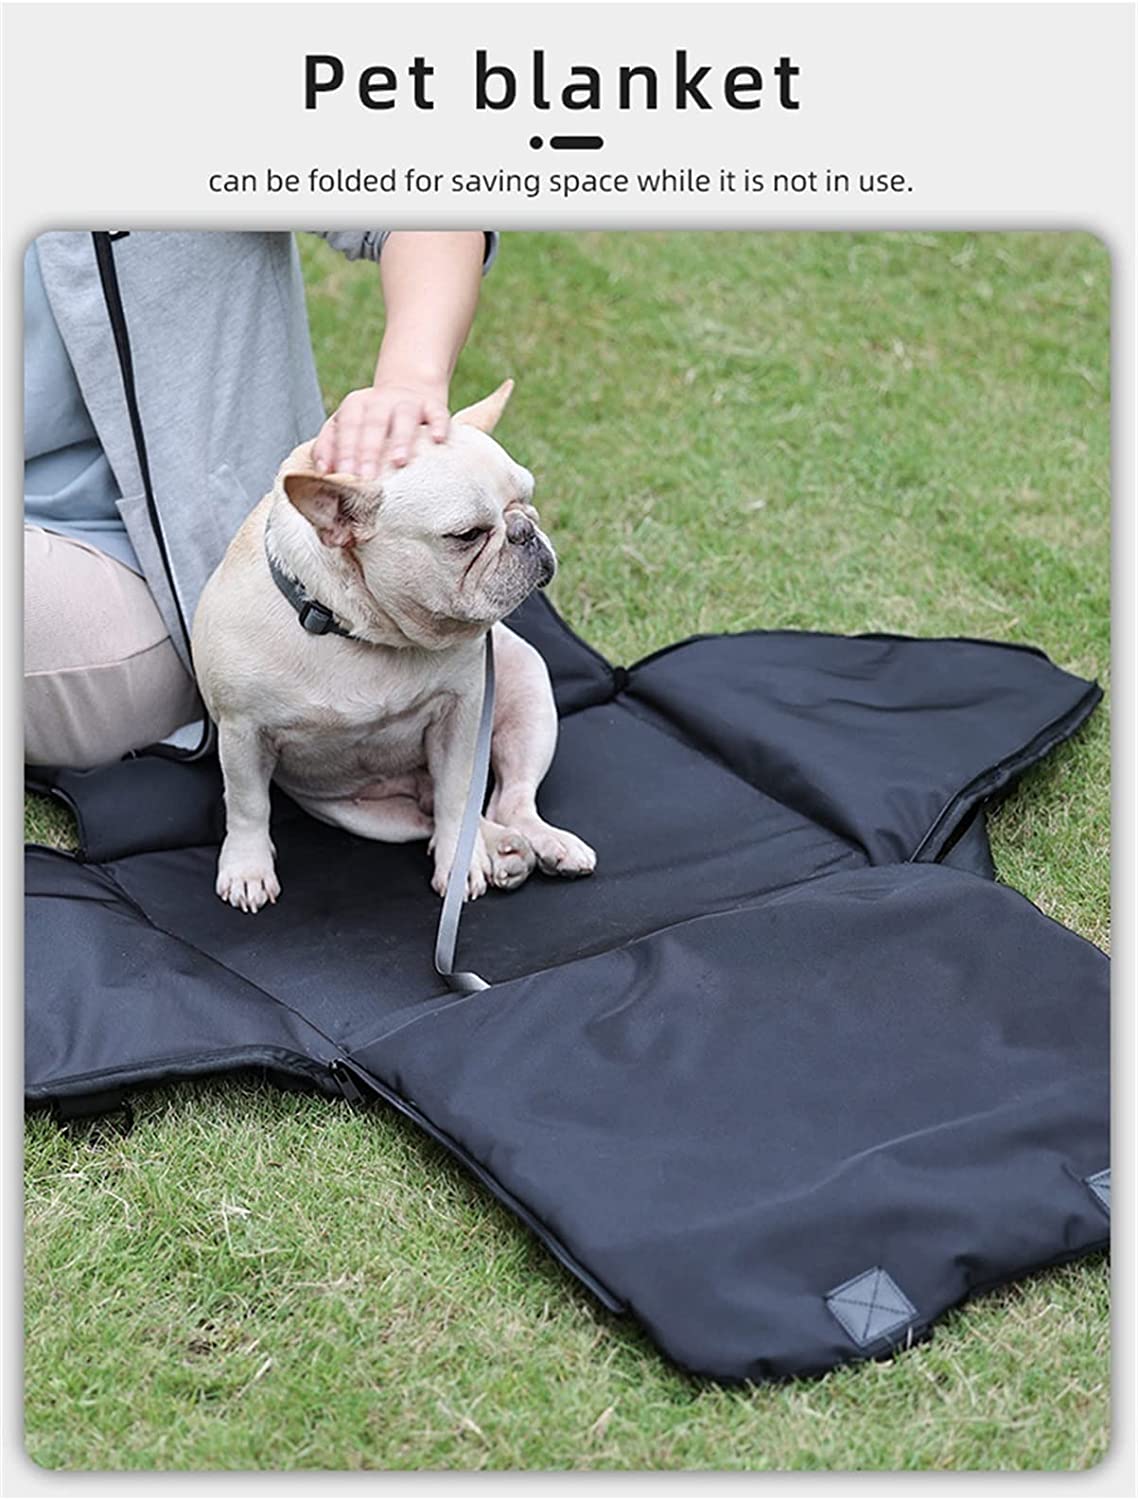 Pet Travel Mat Dog Car Seat Bed Carrier